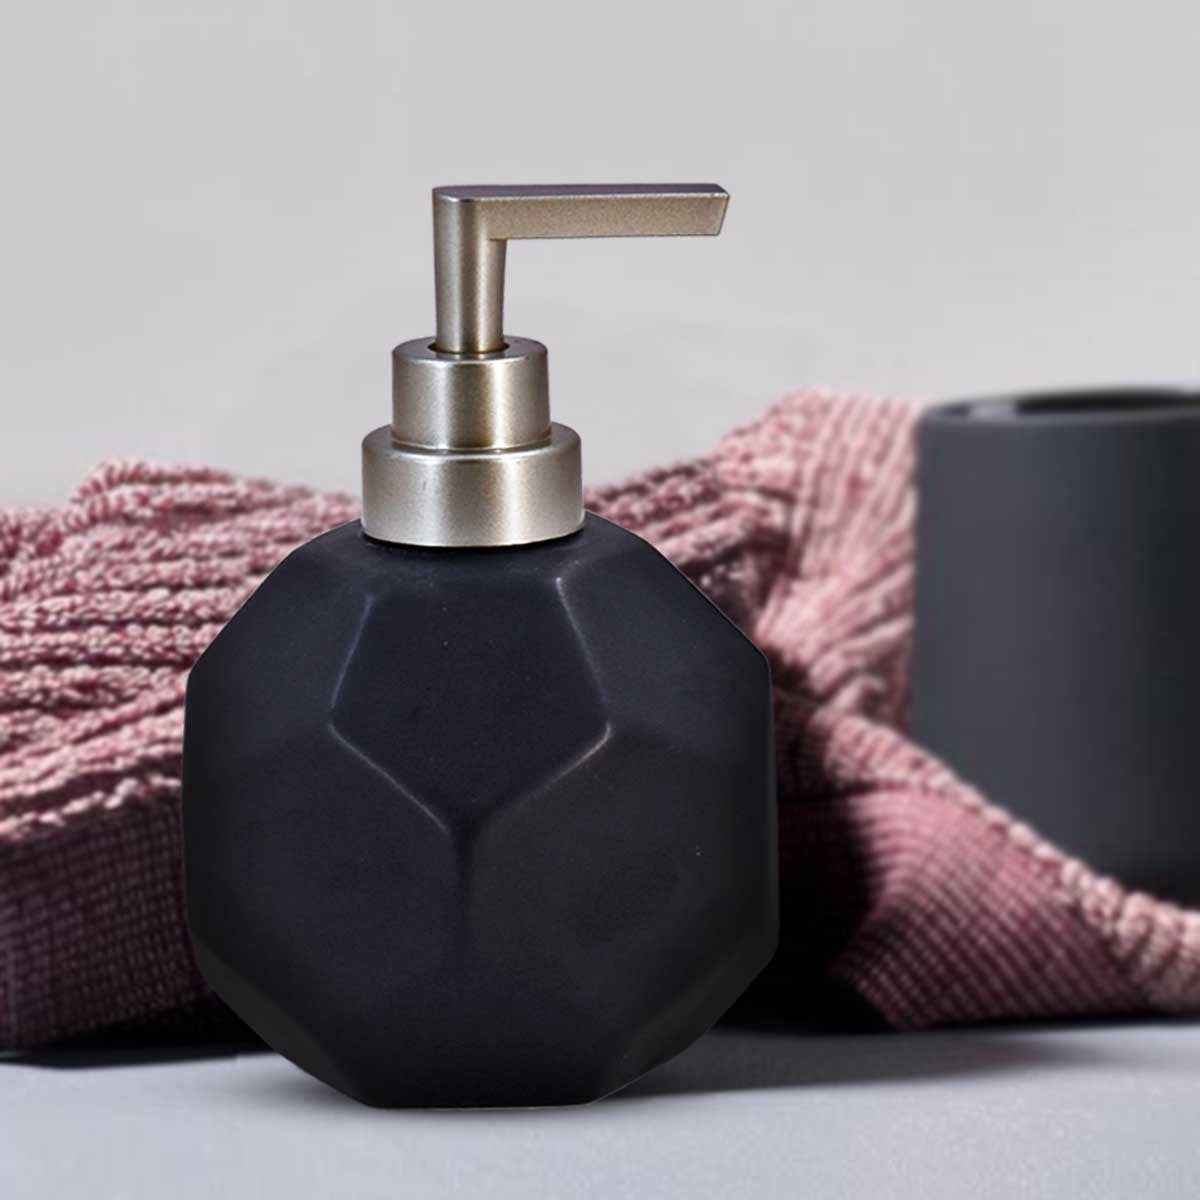 Ceramic Soap Dispenser handwash Pump for Bathroom, Set of 1, White (8027)